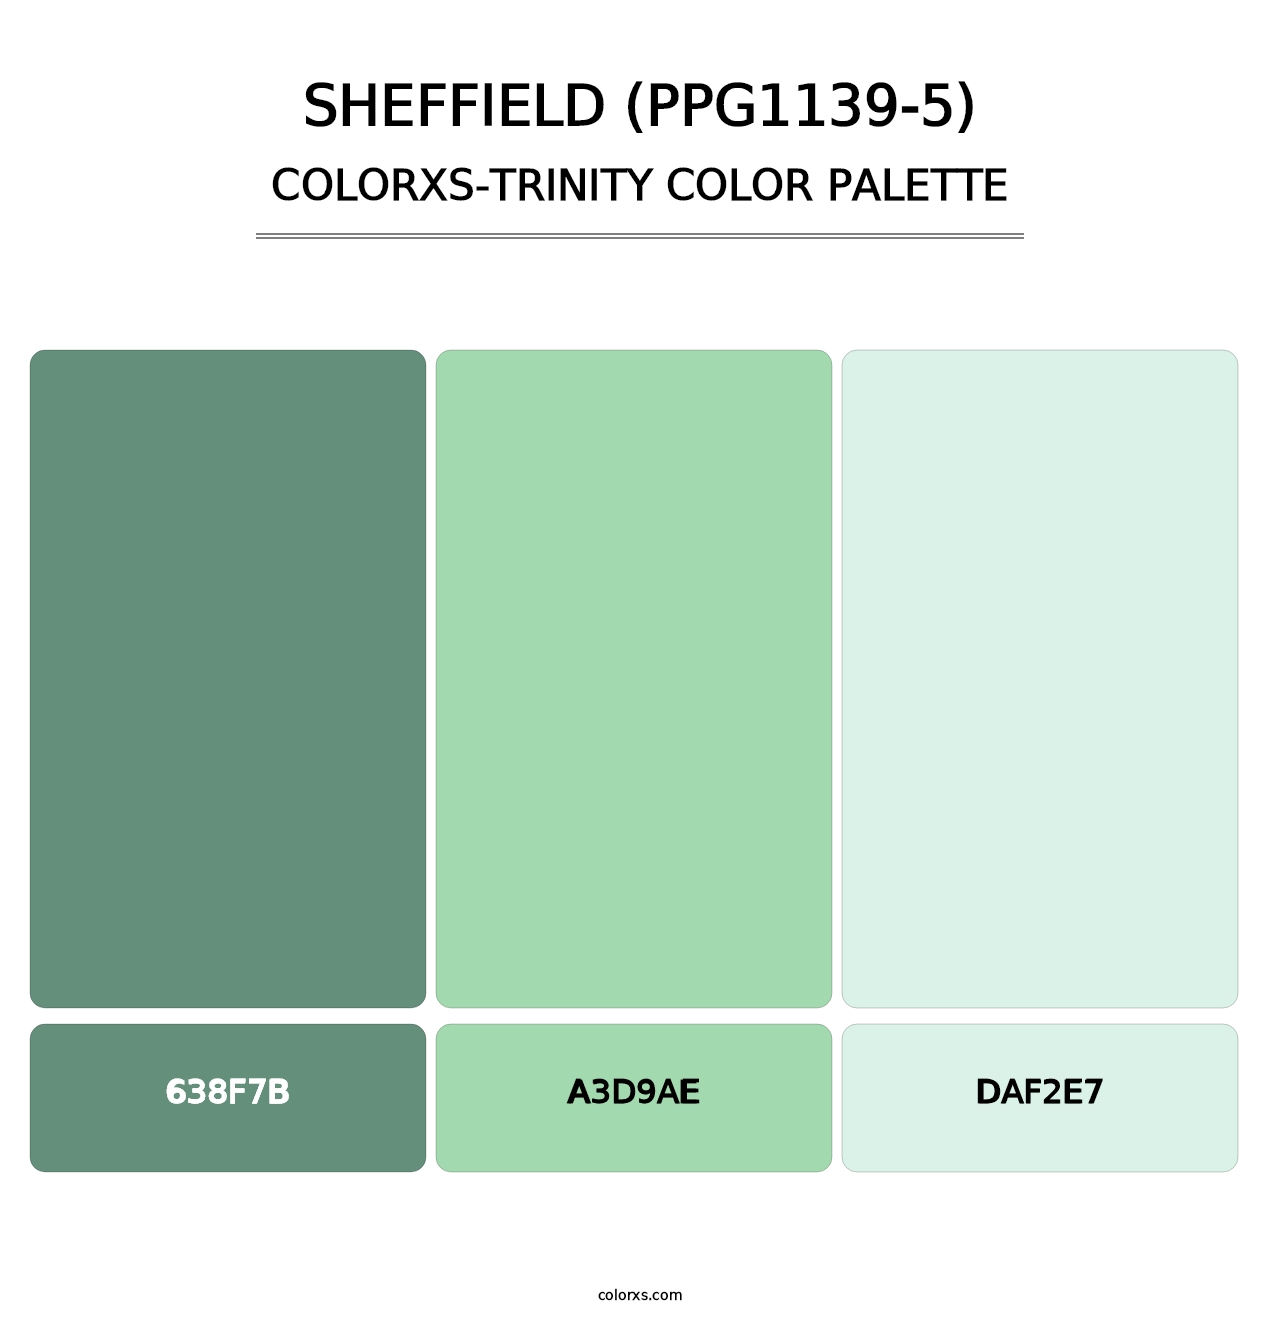 Sheffield (PPG1139-5) - Colorxs Trinity Palette